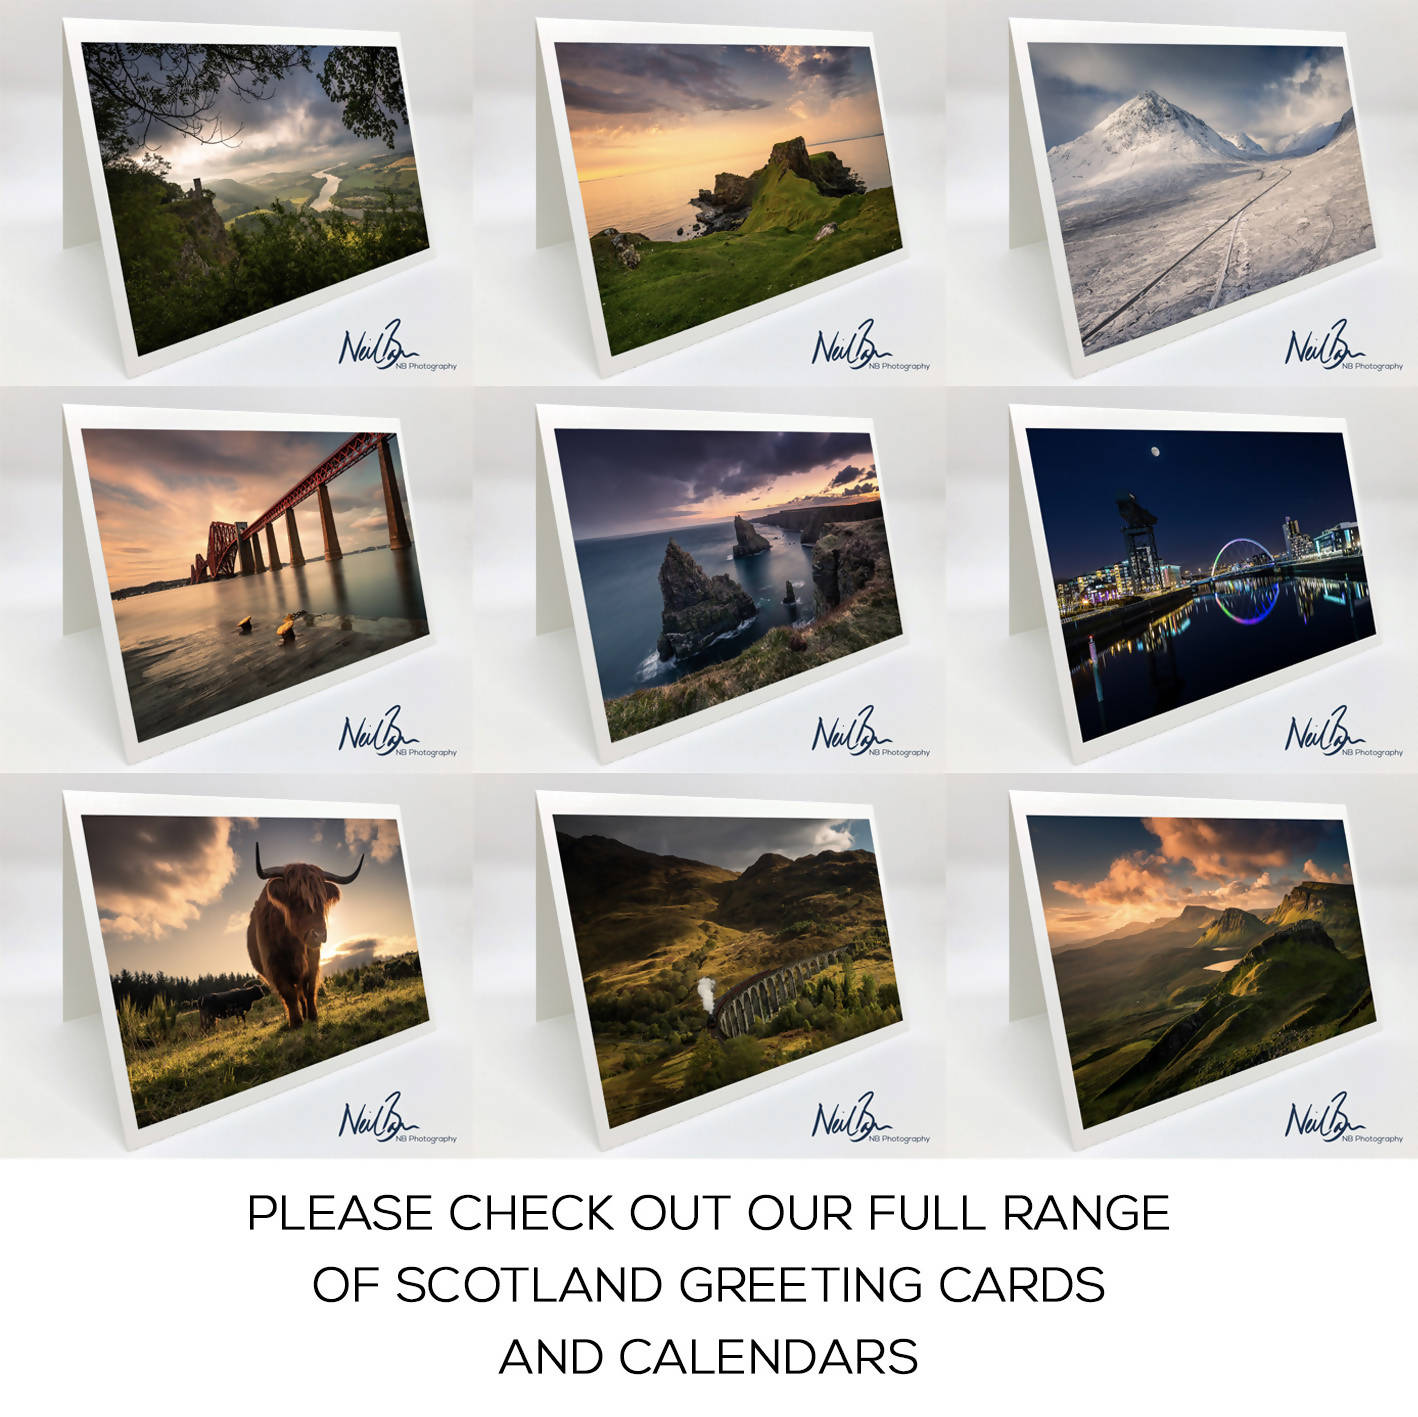 Milarrochy Bay, Loch Lomond - Scotland Greeting Card - Blank Inside